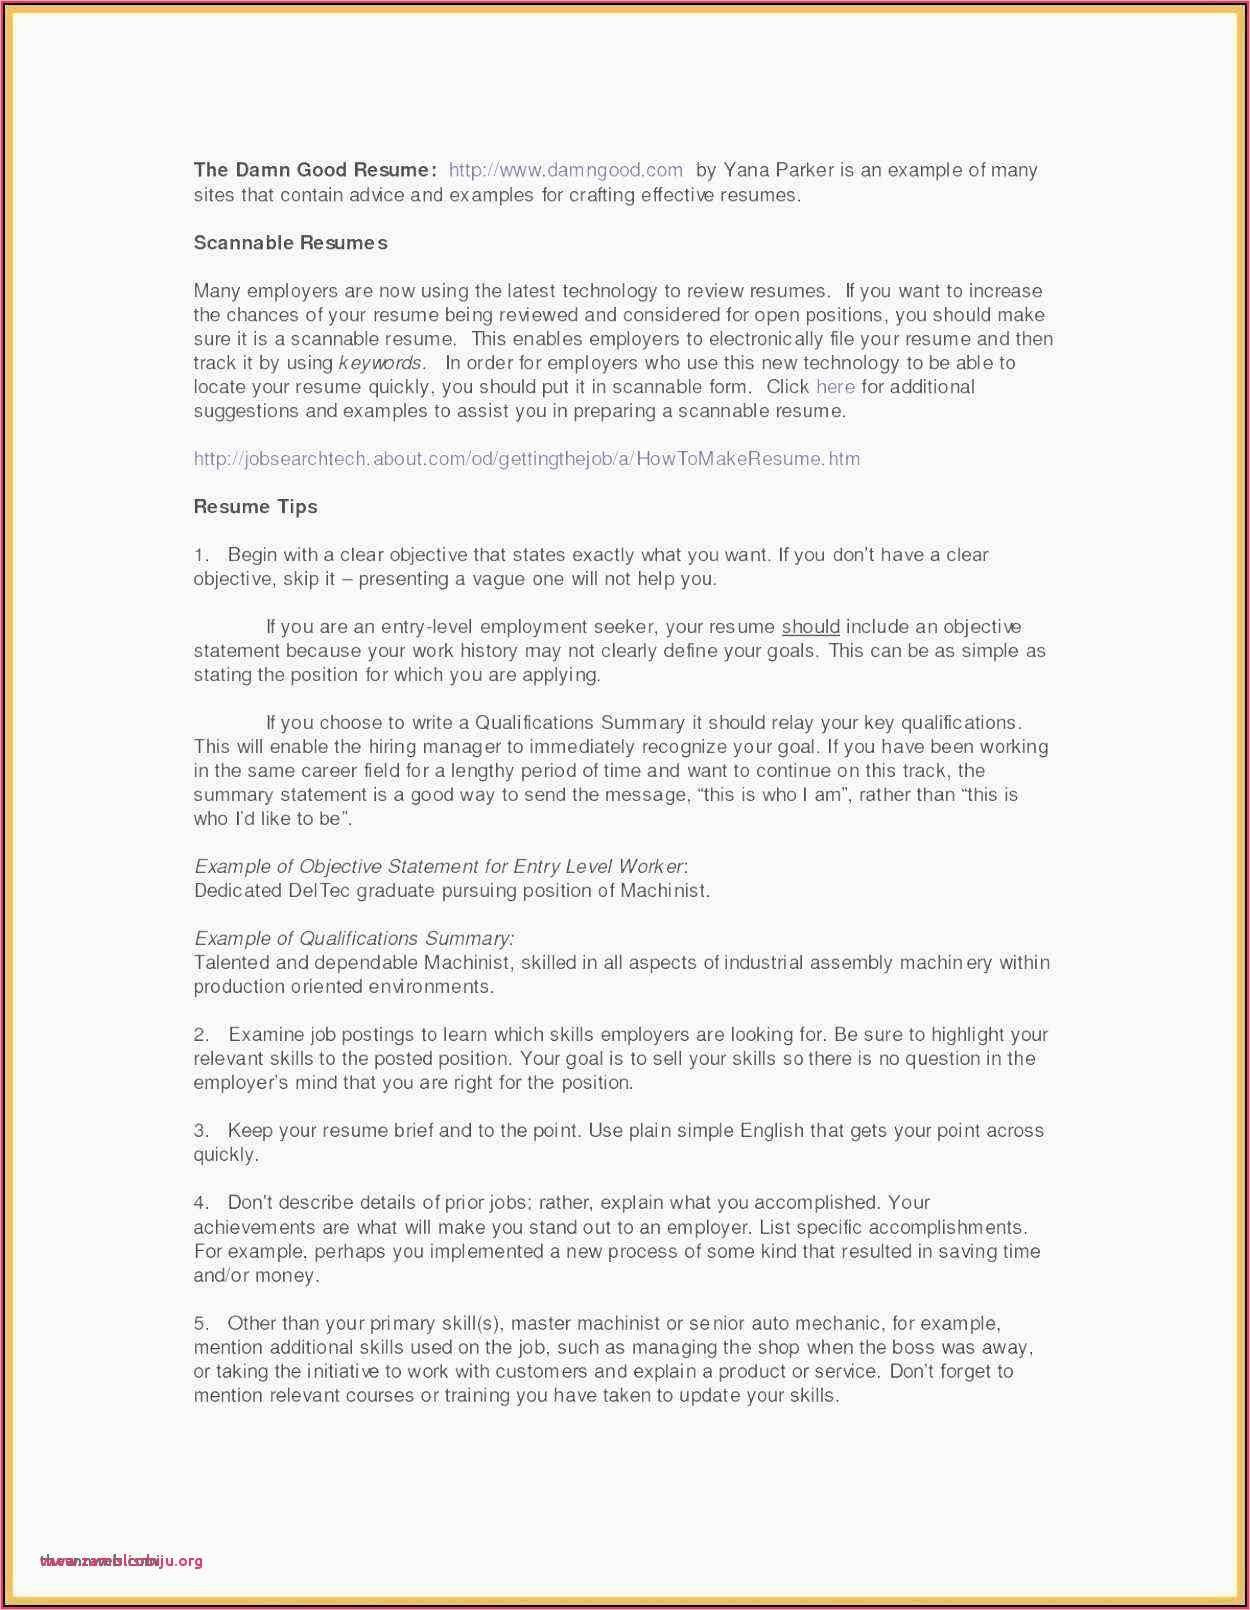 Resume Objective Statement Resume Objective Example Entry Level New Medical Assistant Resume Objective Examples Entry Level C2a2aec292 39 Of Resume Objective Example Entry Level resume objective statement|wikiresume.com